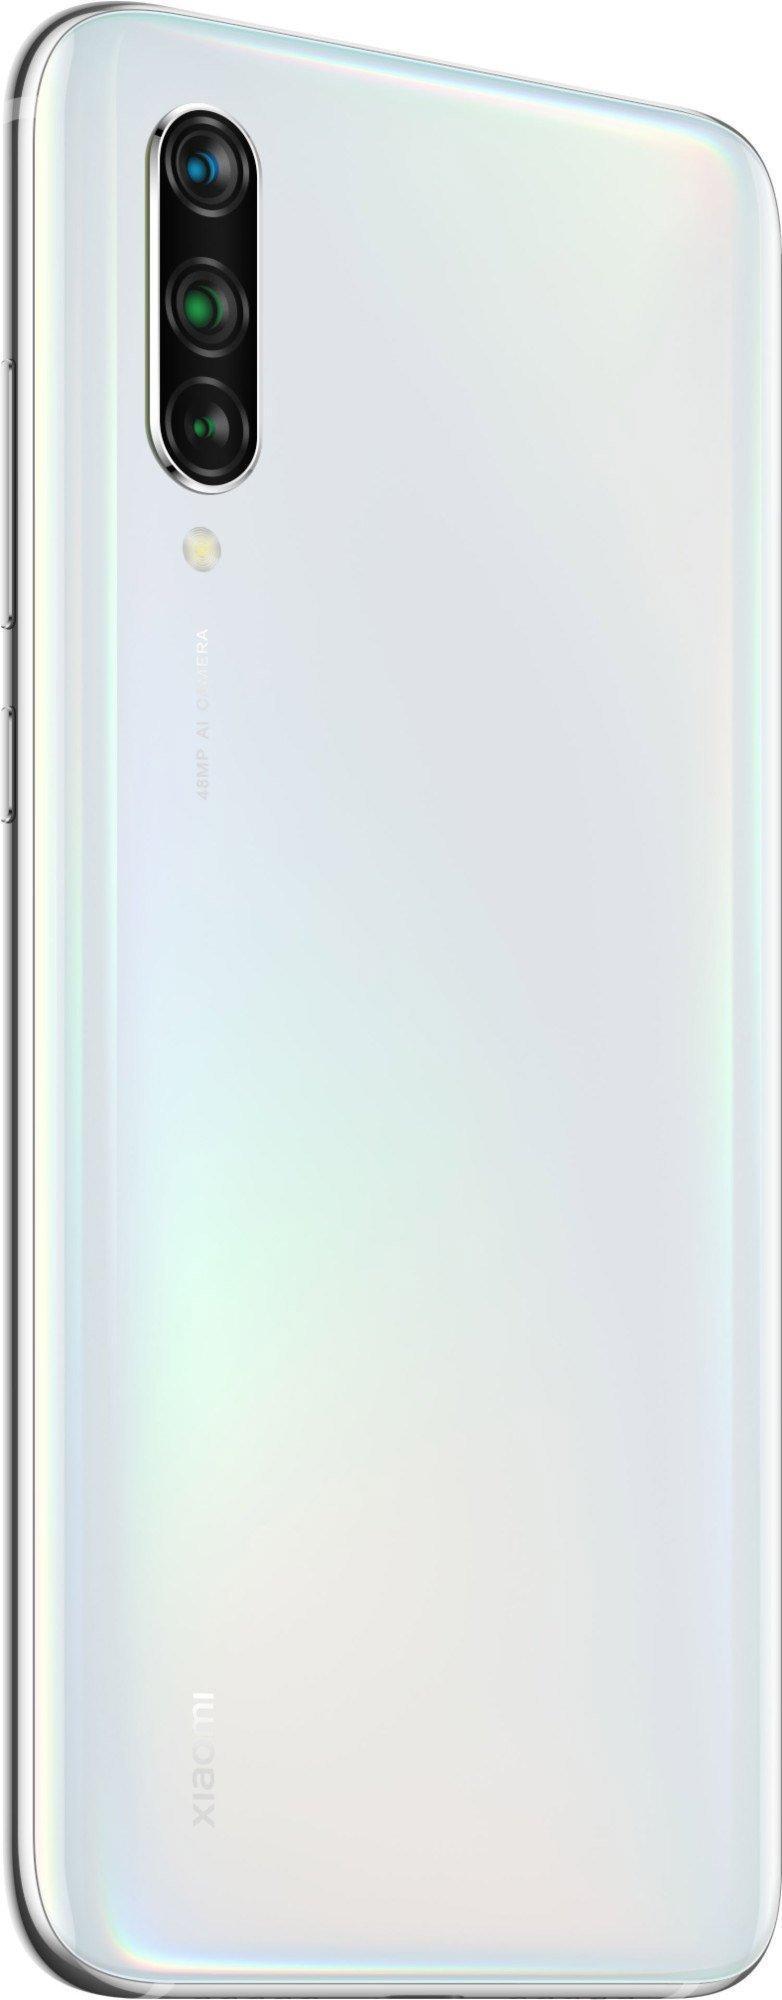 Смартфон Xiaomi Mi 9 Lite 6/128Gb Pearl White заказать